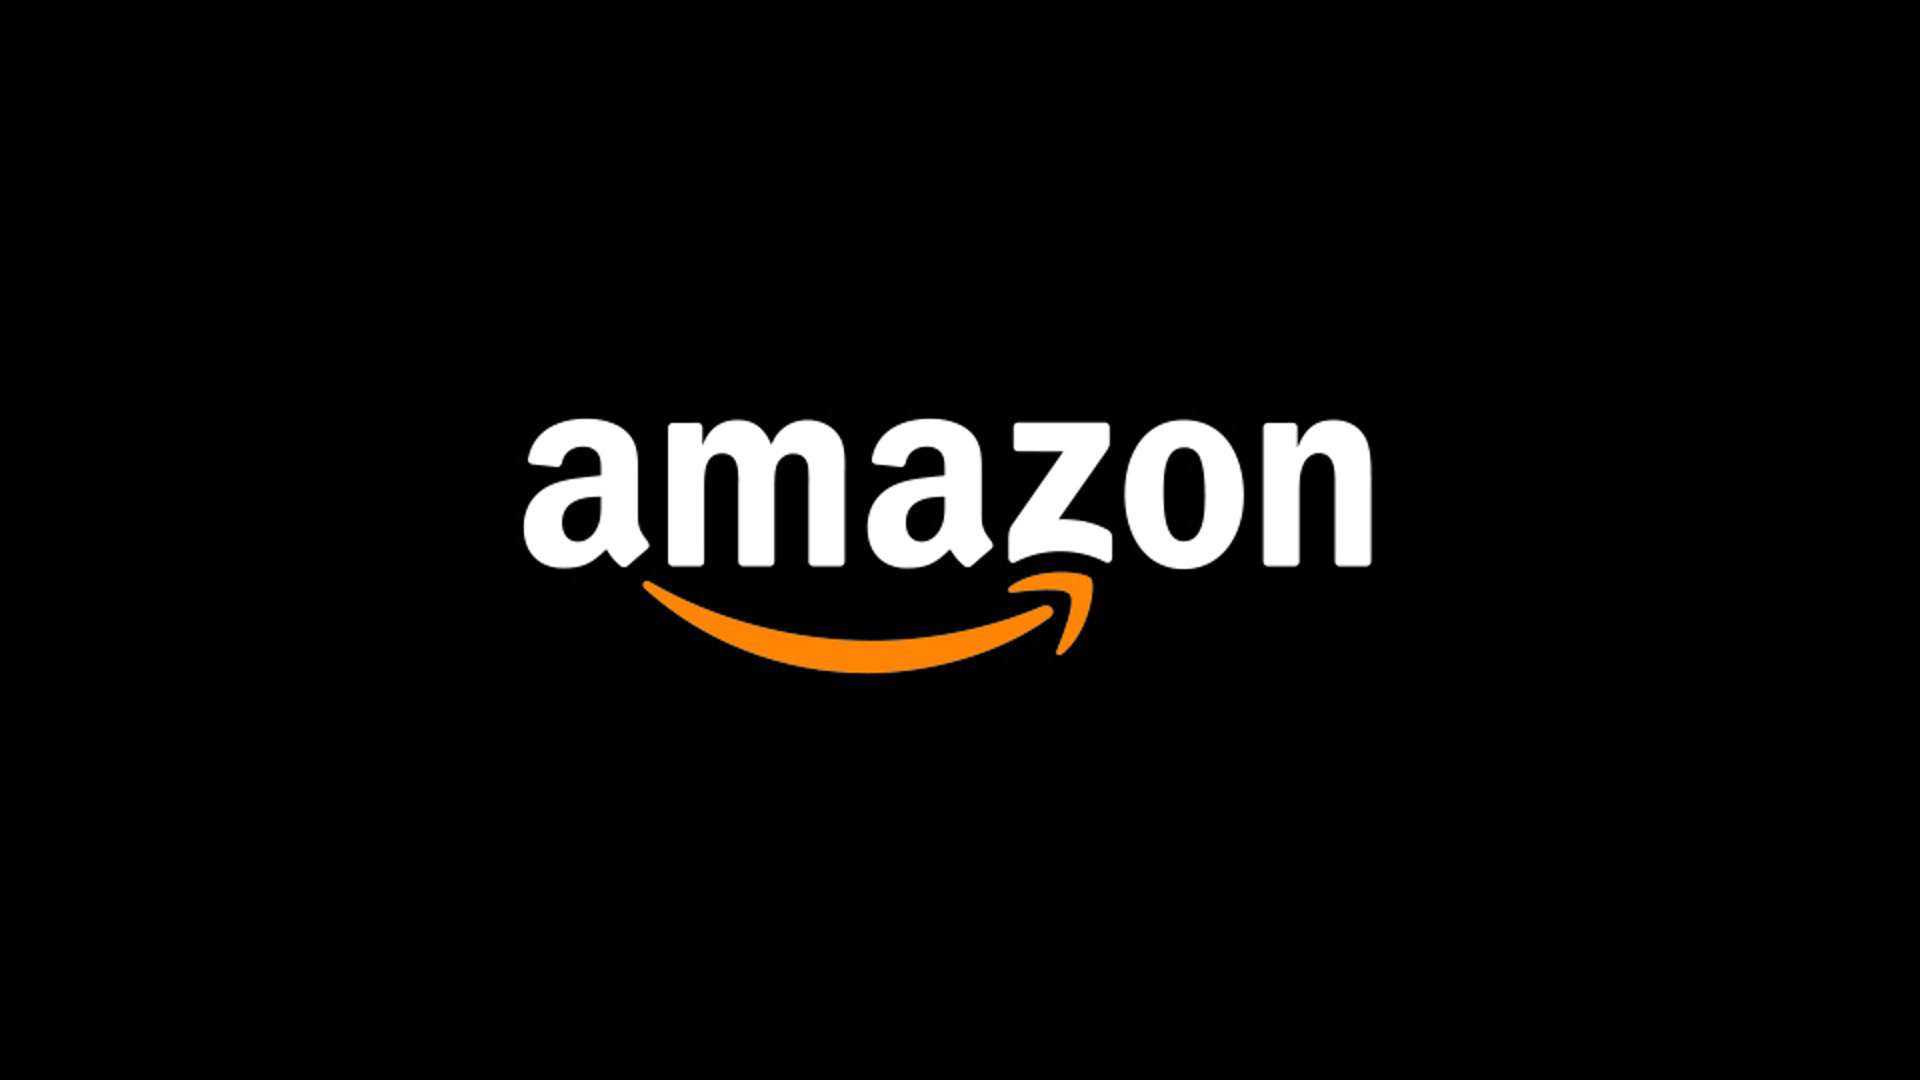 Amazon-Logo-Black.jpg